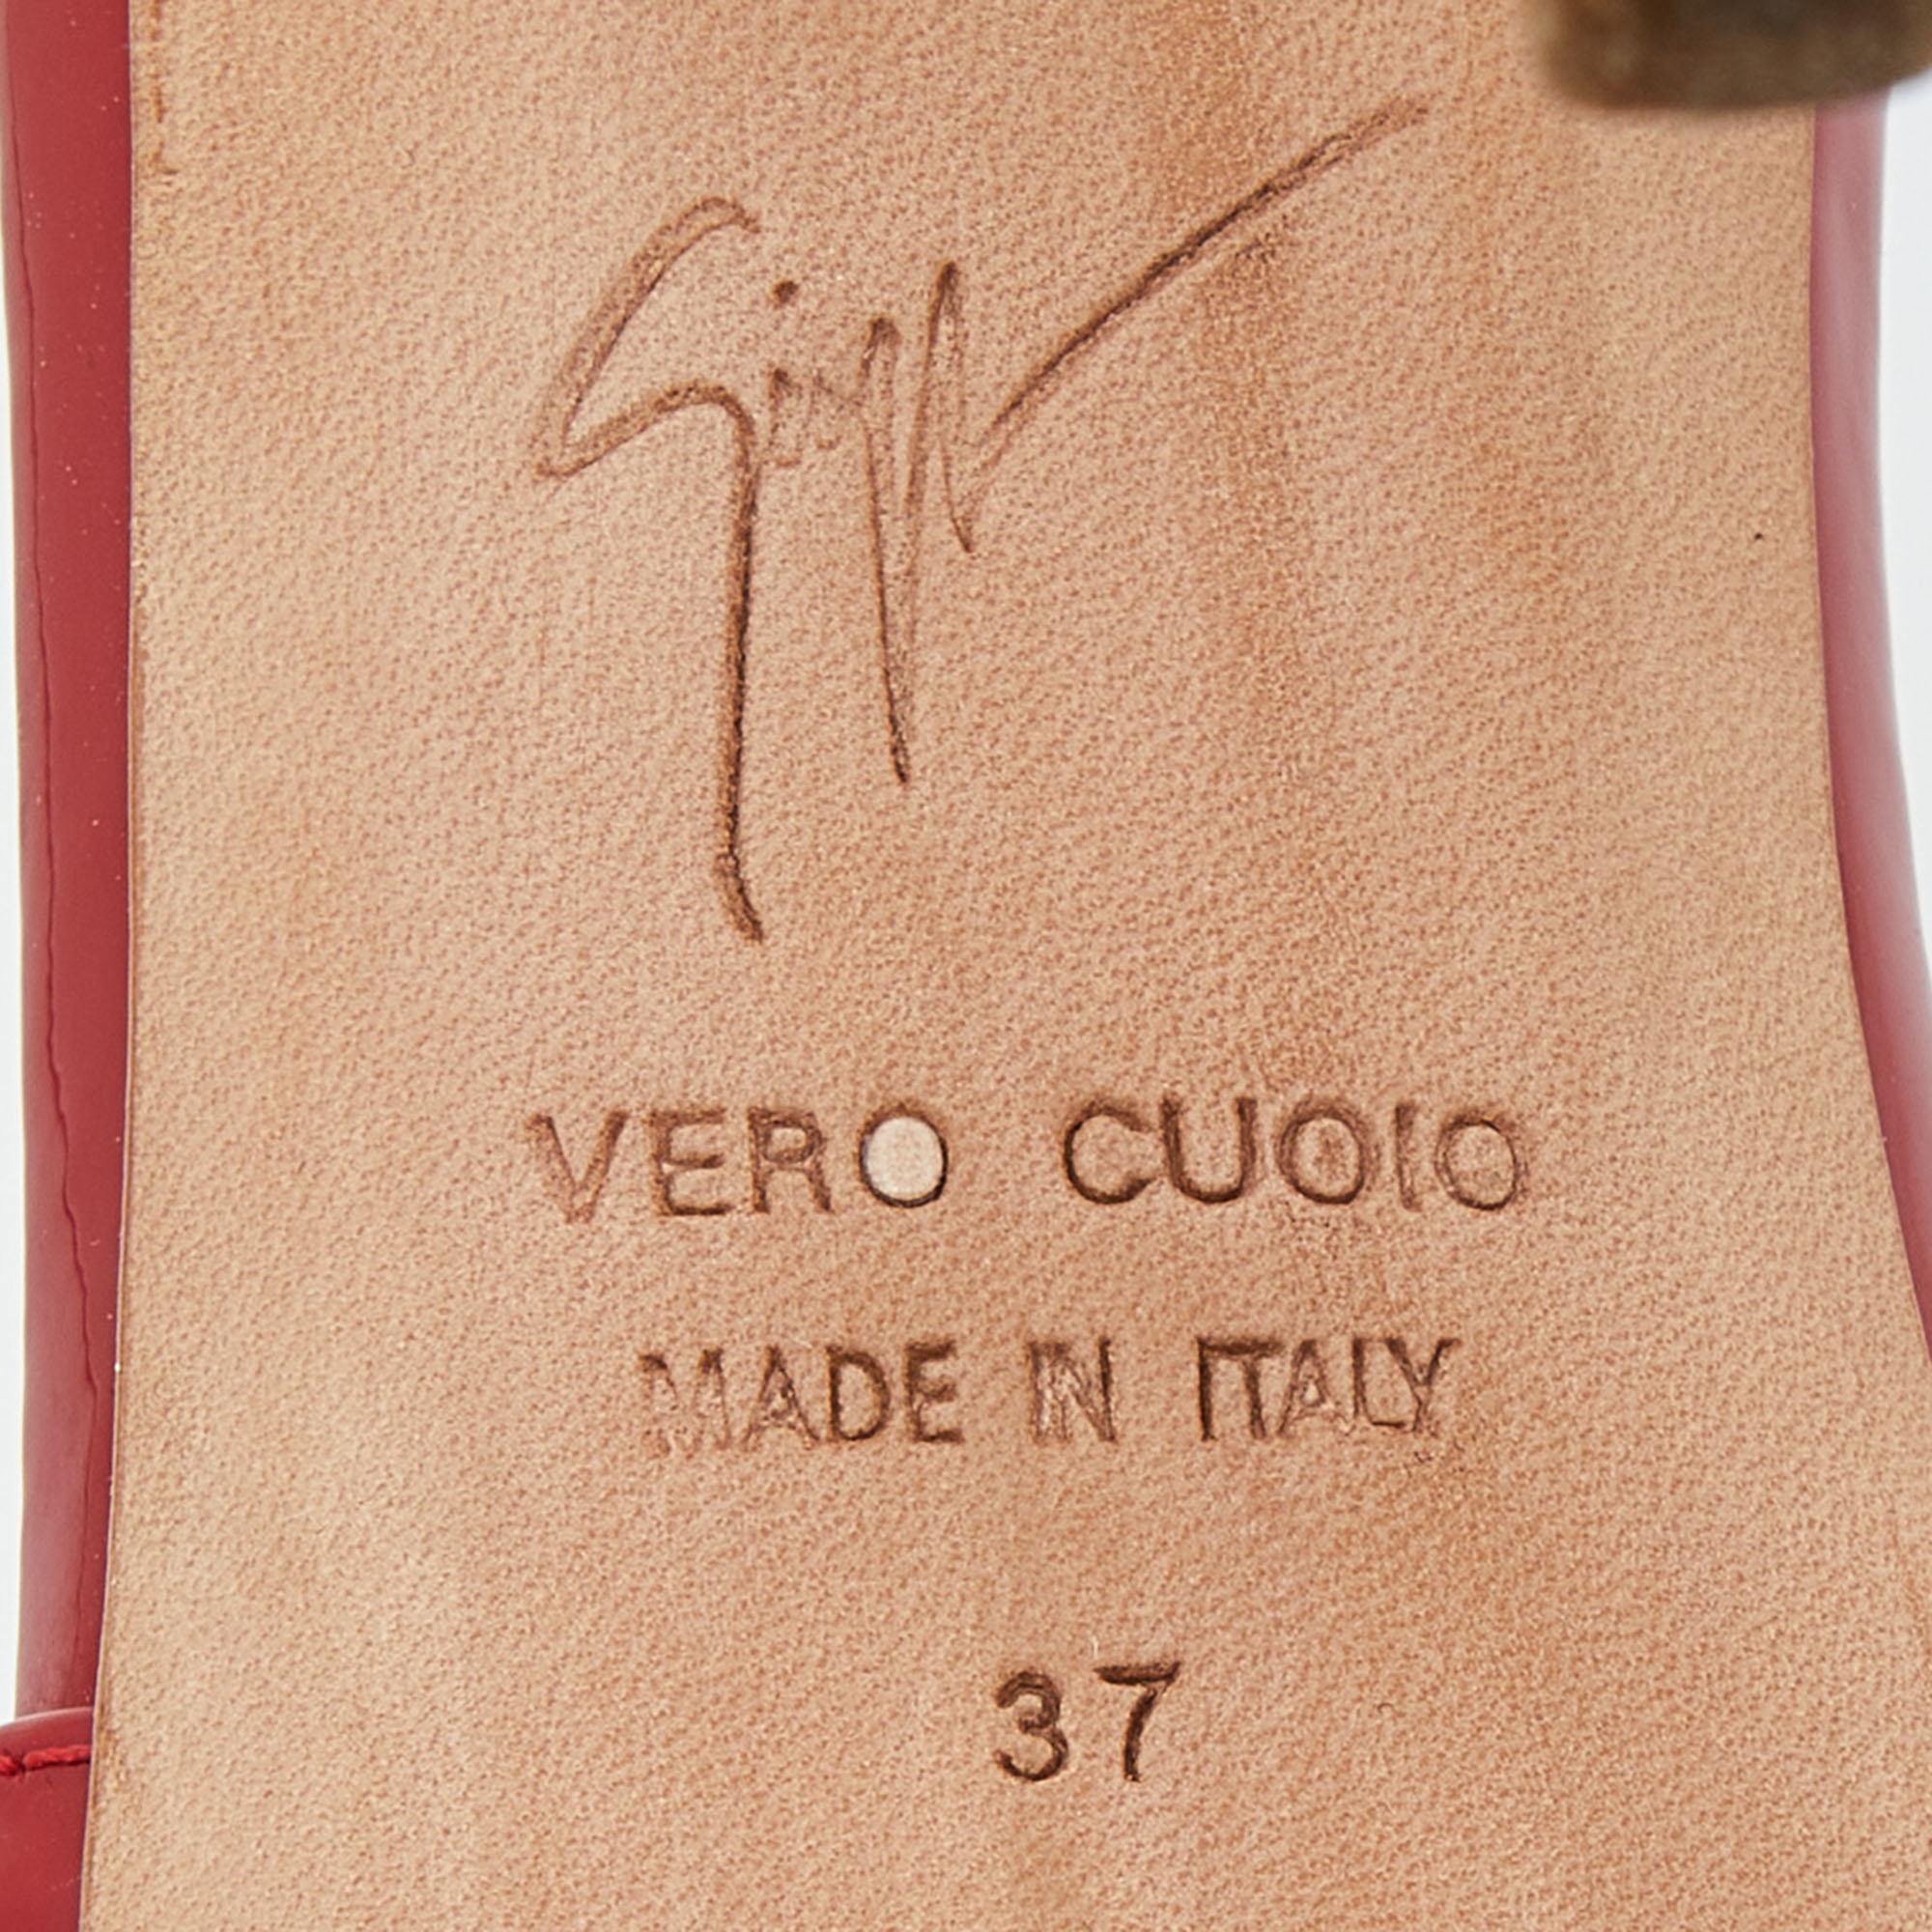 Giuseppe Zanotti Red Patent Leather Nettie Sandals Size 37